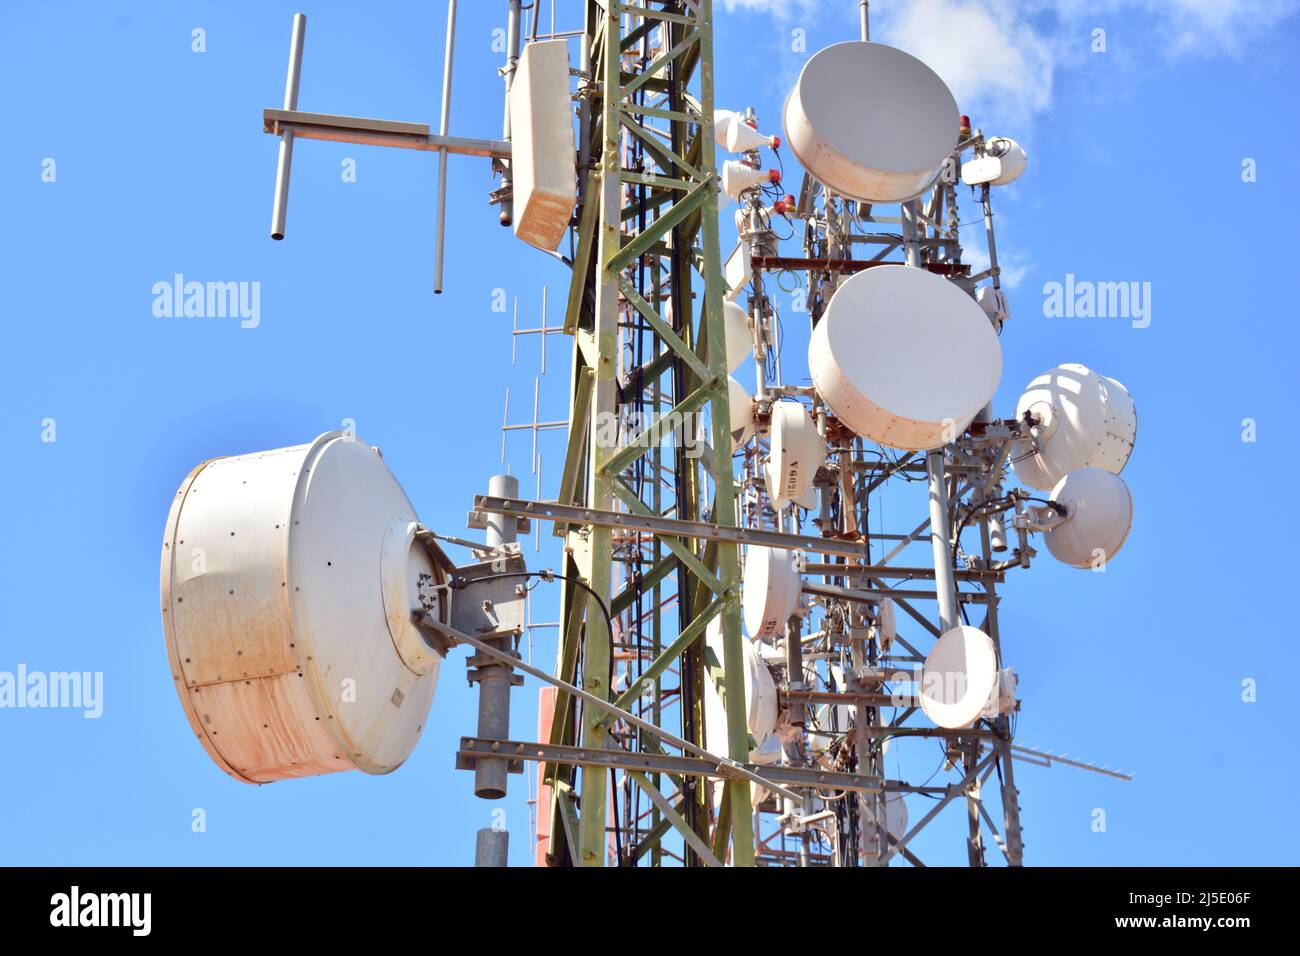 Detalle de una torre de telecomunicaciones Foto Stock